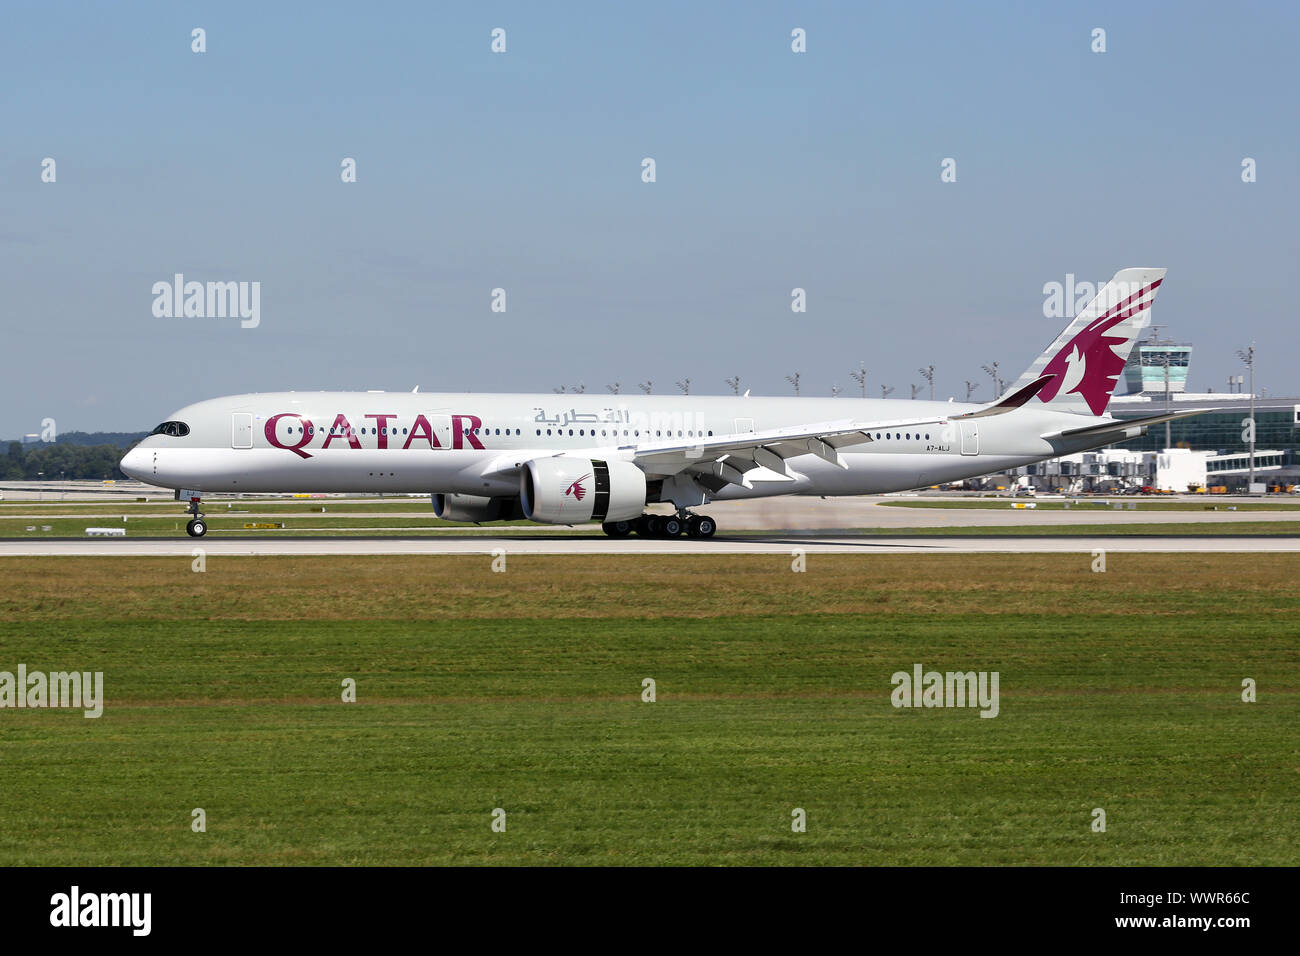 Qatar Airways Airbus A350-900 Aircraft Banque D'Images